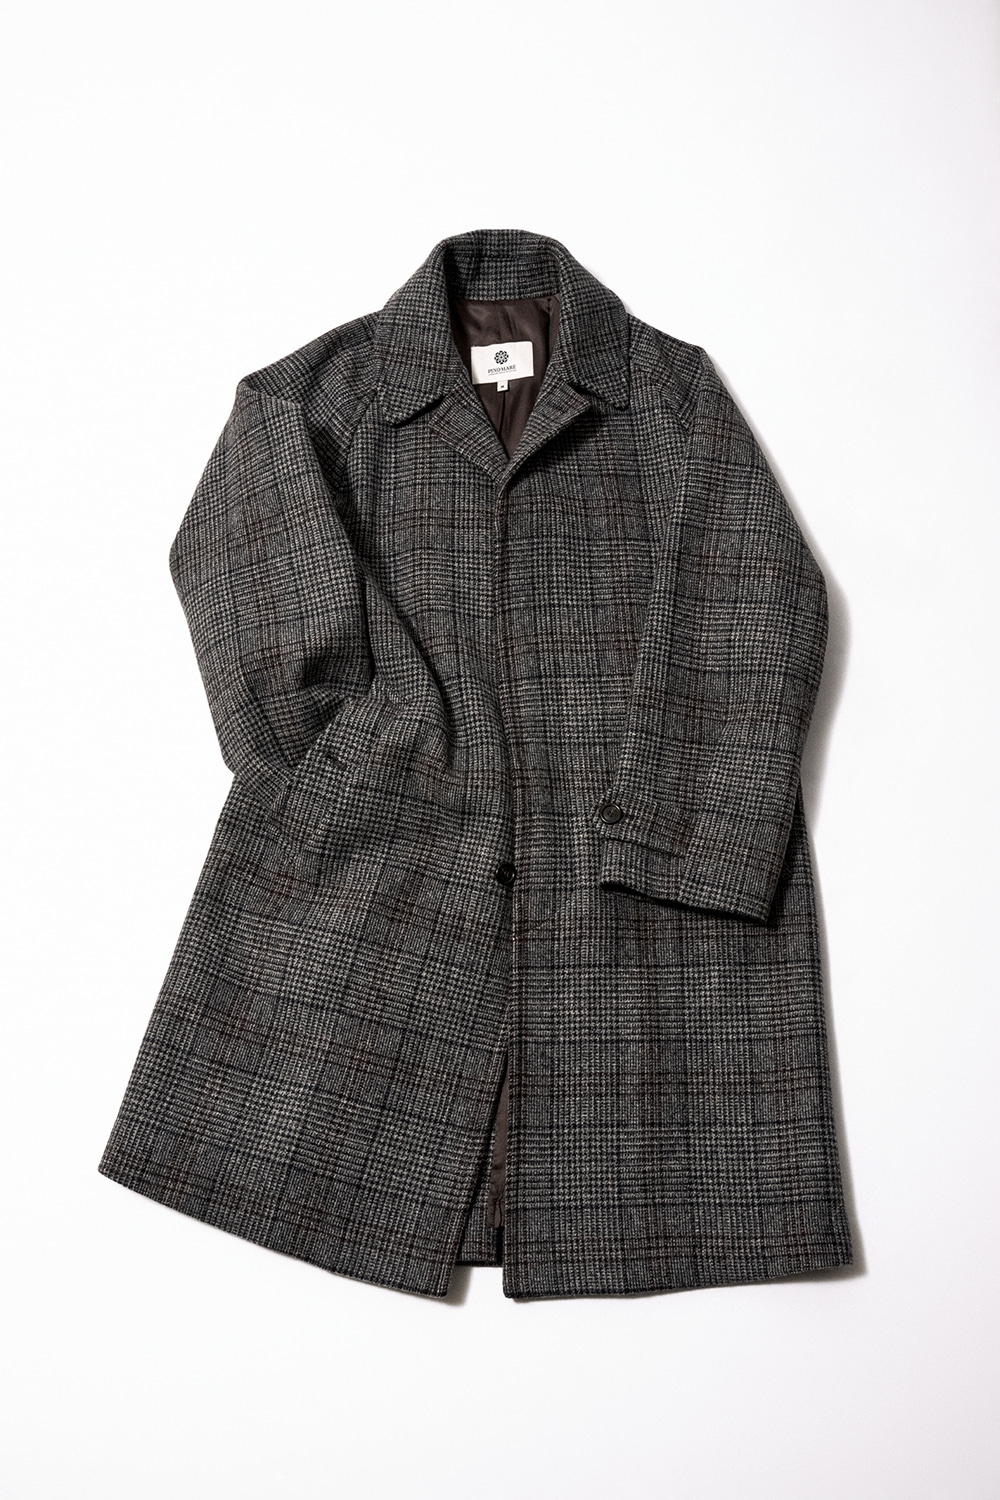 Raglan Coat (Glen Check)PINOMARE(피노마레)